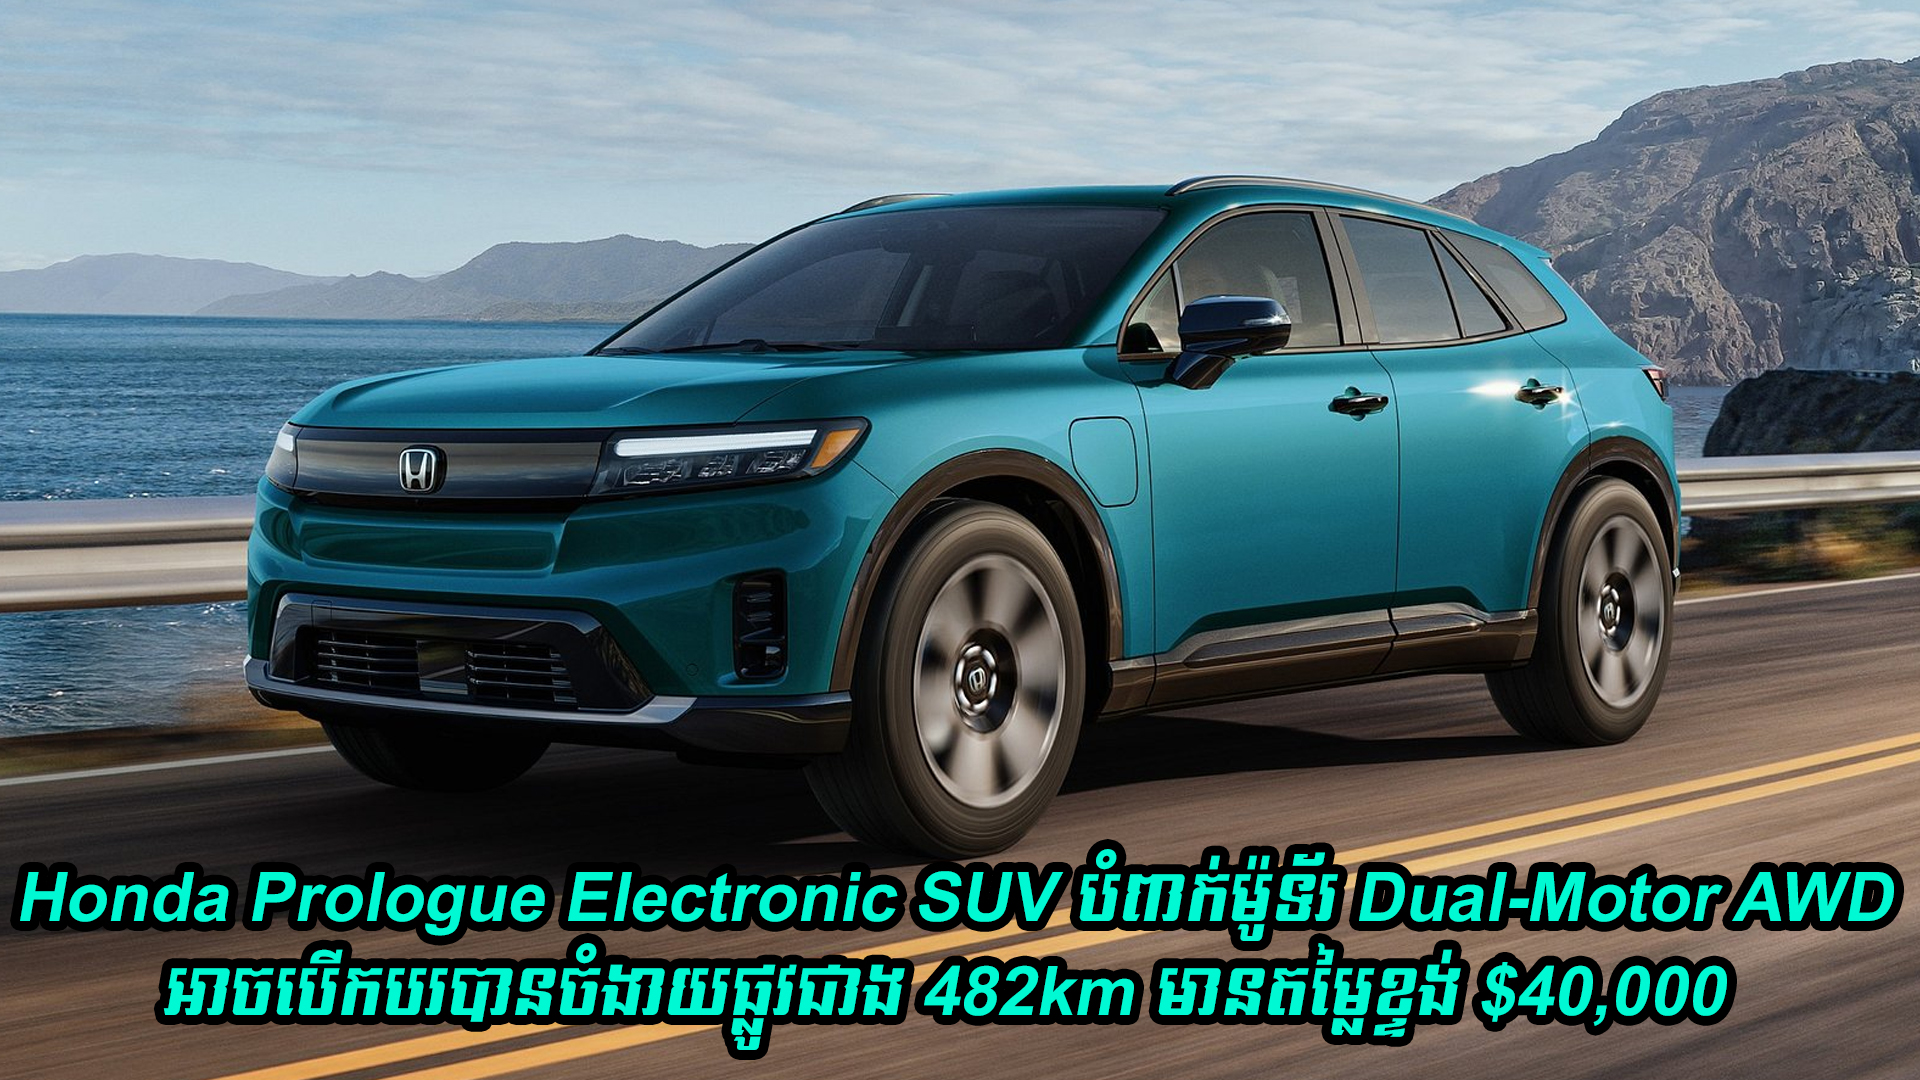 Honda Prologue Electronic SUV បំពាក់ម៉ូទ័រអគ្គិសនី Dual-Motor AWD អាចបើកបរបានចំងាយផ្លូវជាង 482km មានតម្លៃខ្ទង់ $40,000